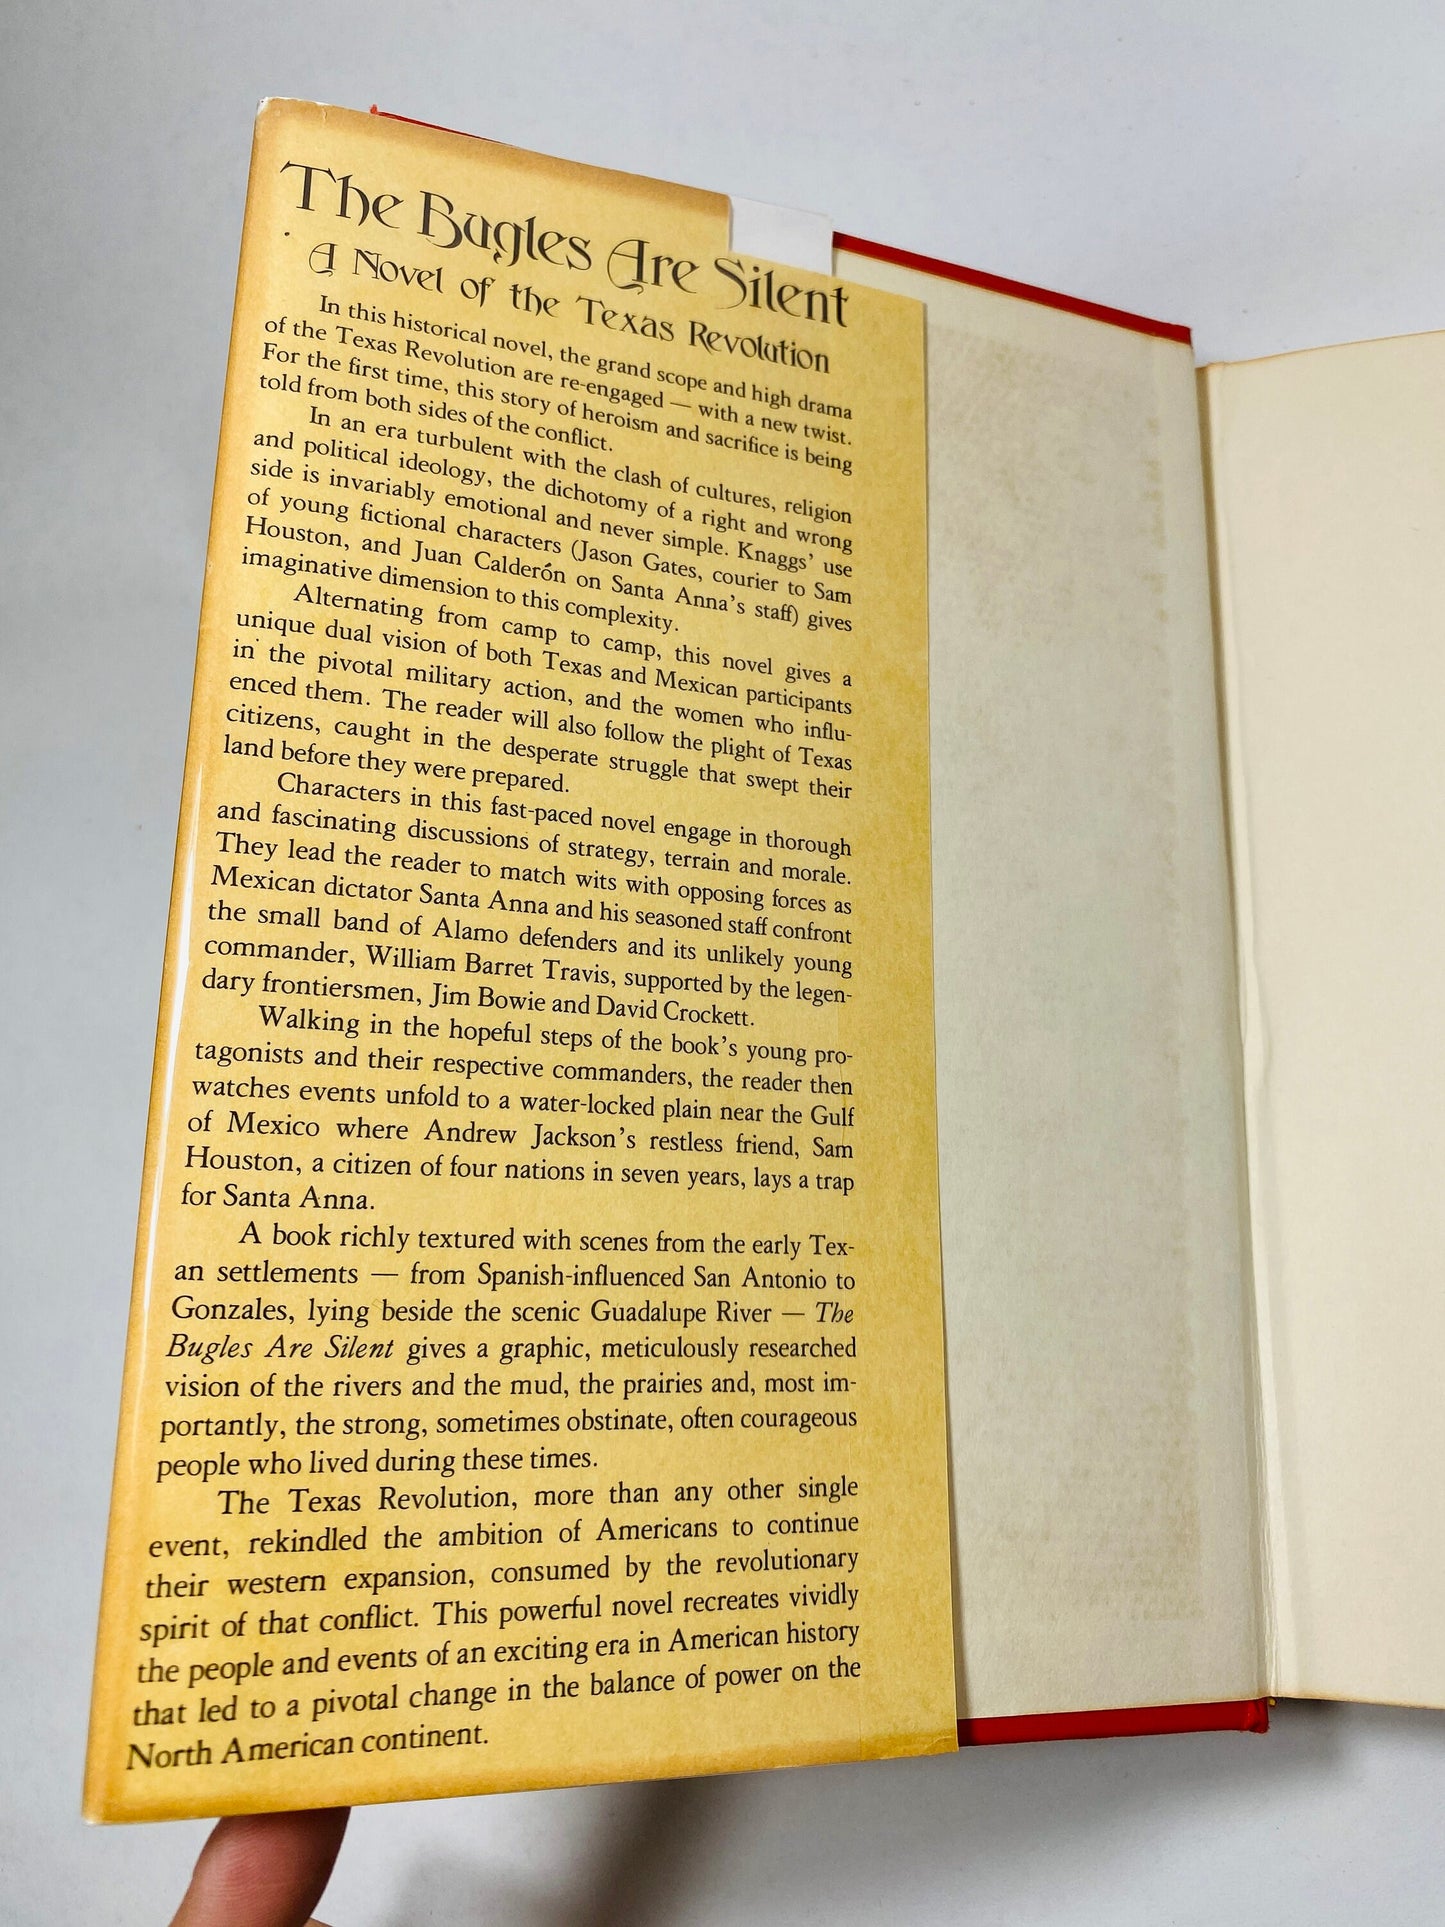 TR Fehrenbach John Knaggs vintage book History of Texas and book Bugles are Silent circa 1977